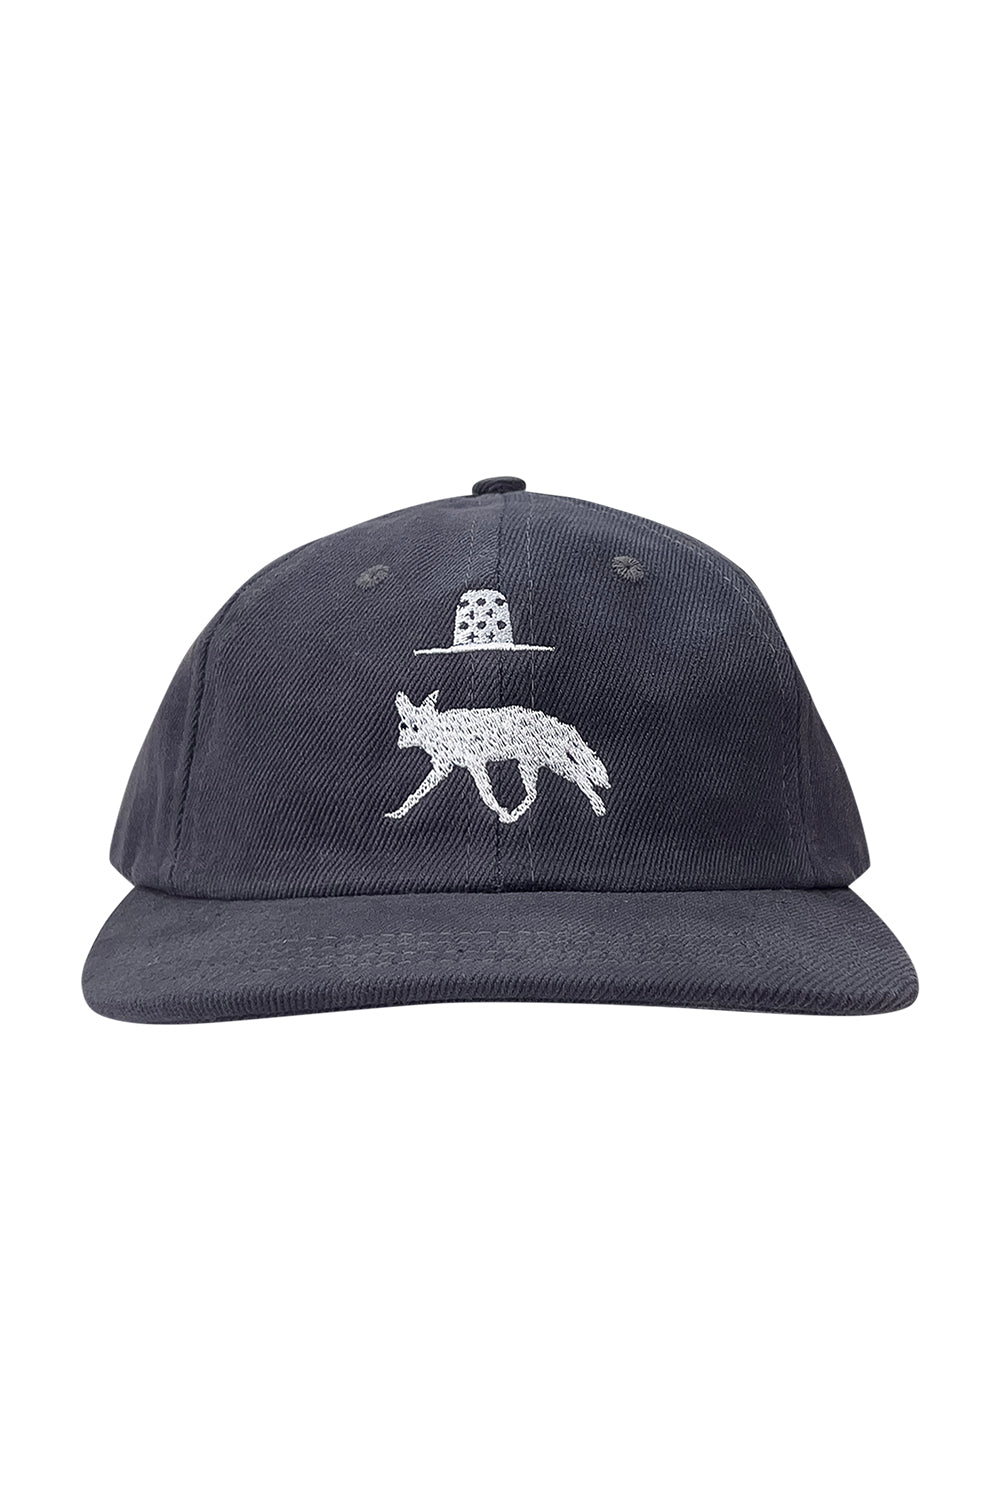 Coyote Twill Cap | Jungmaven Hemp Clothing & Accessories / Color: Diesel Gray